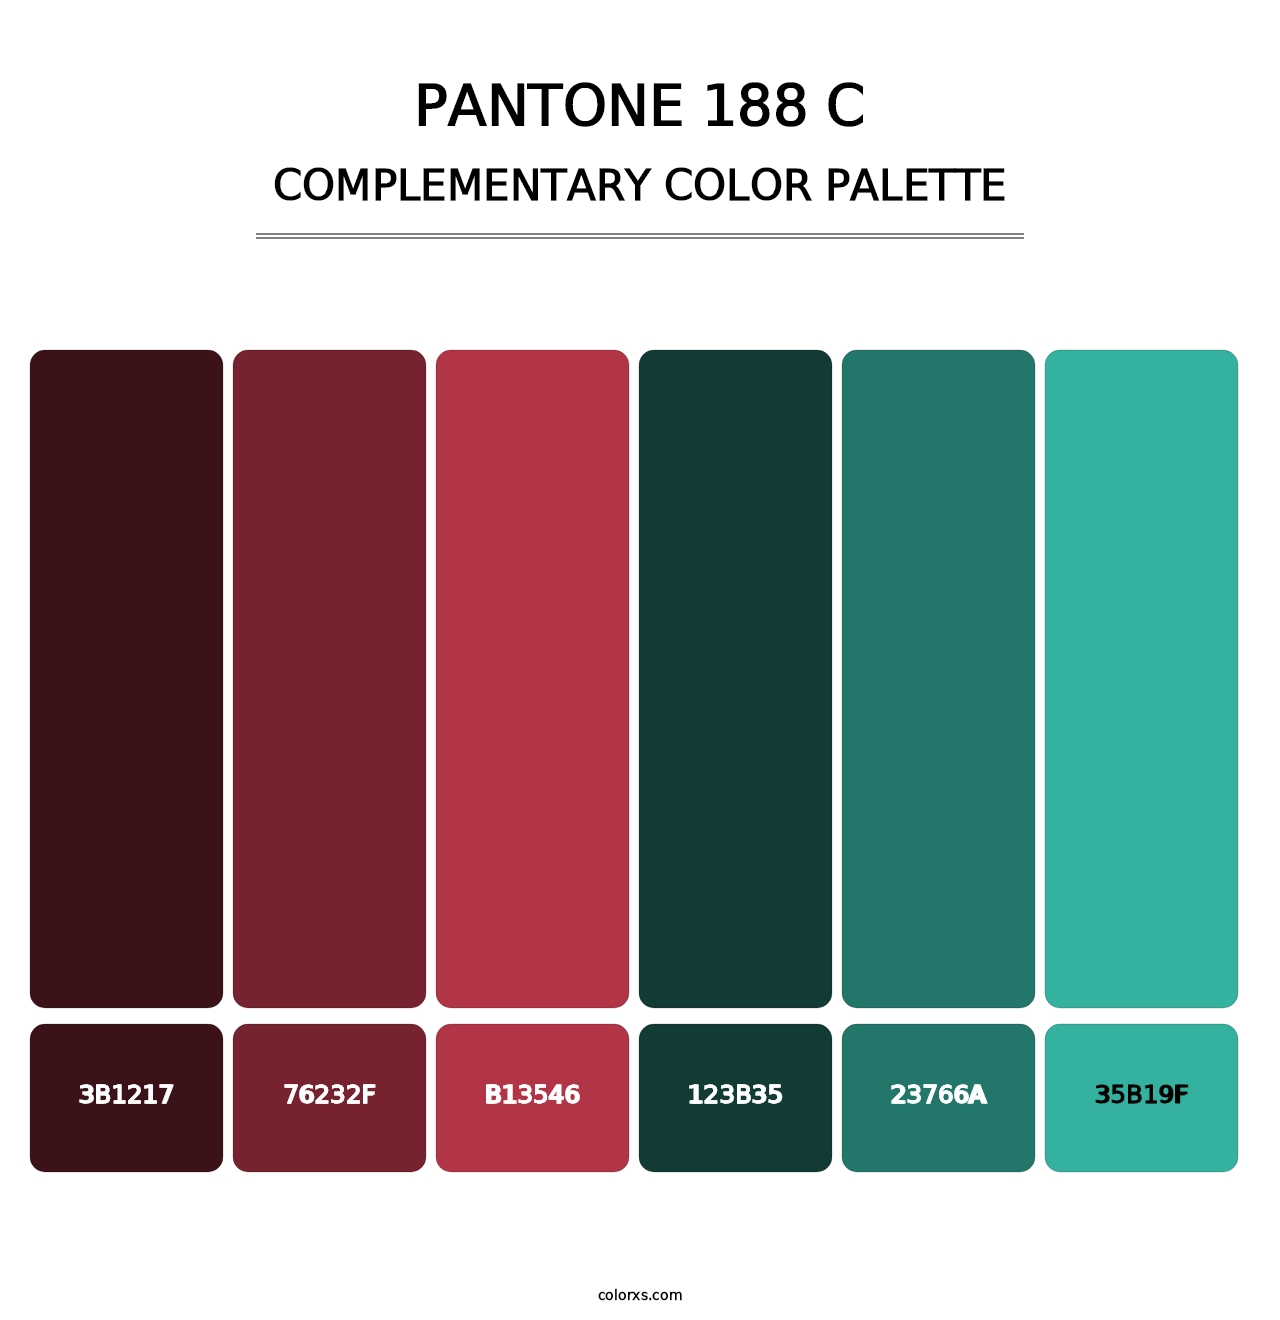 PANTONE 188 C - Complementary Color Palette